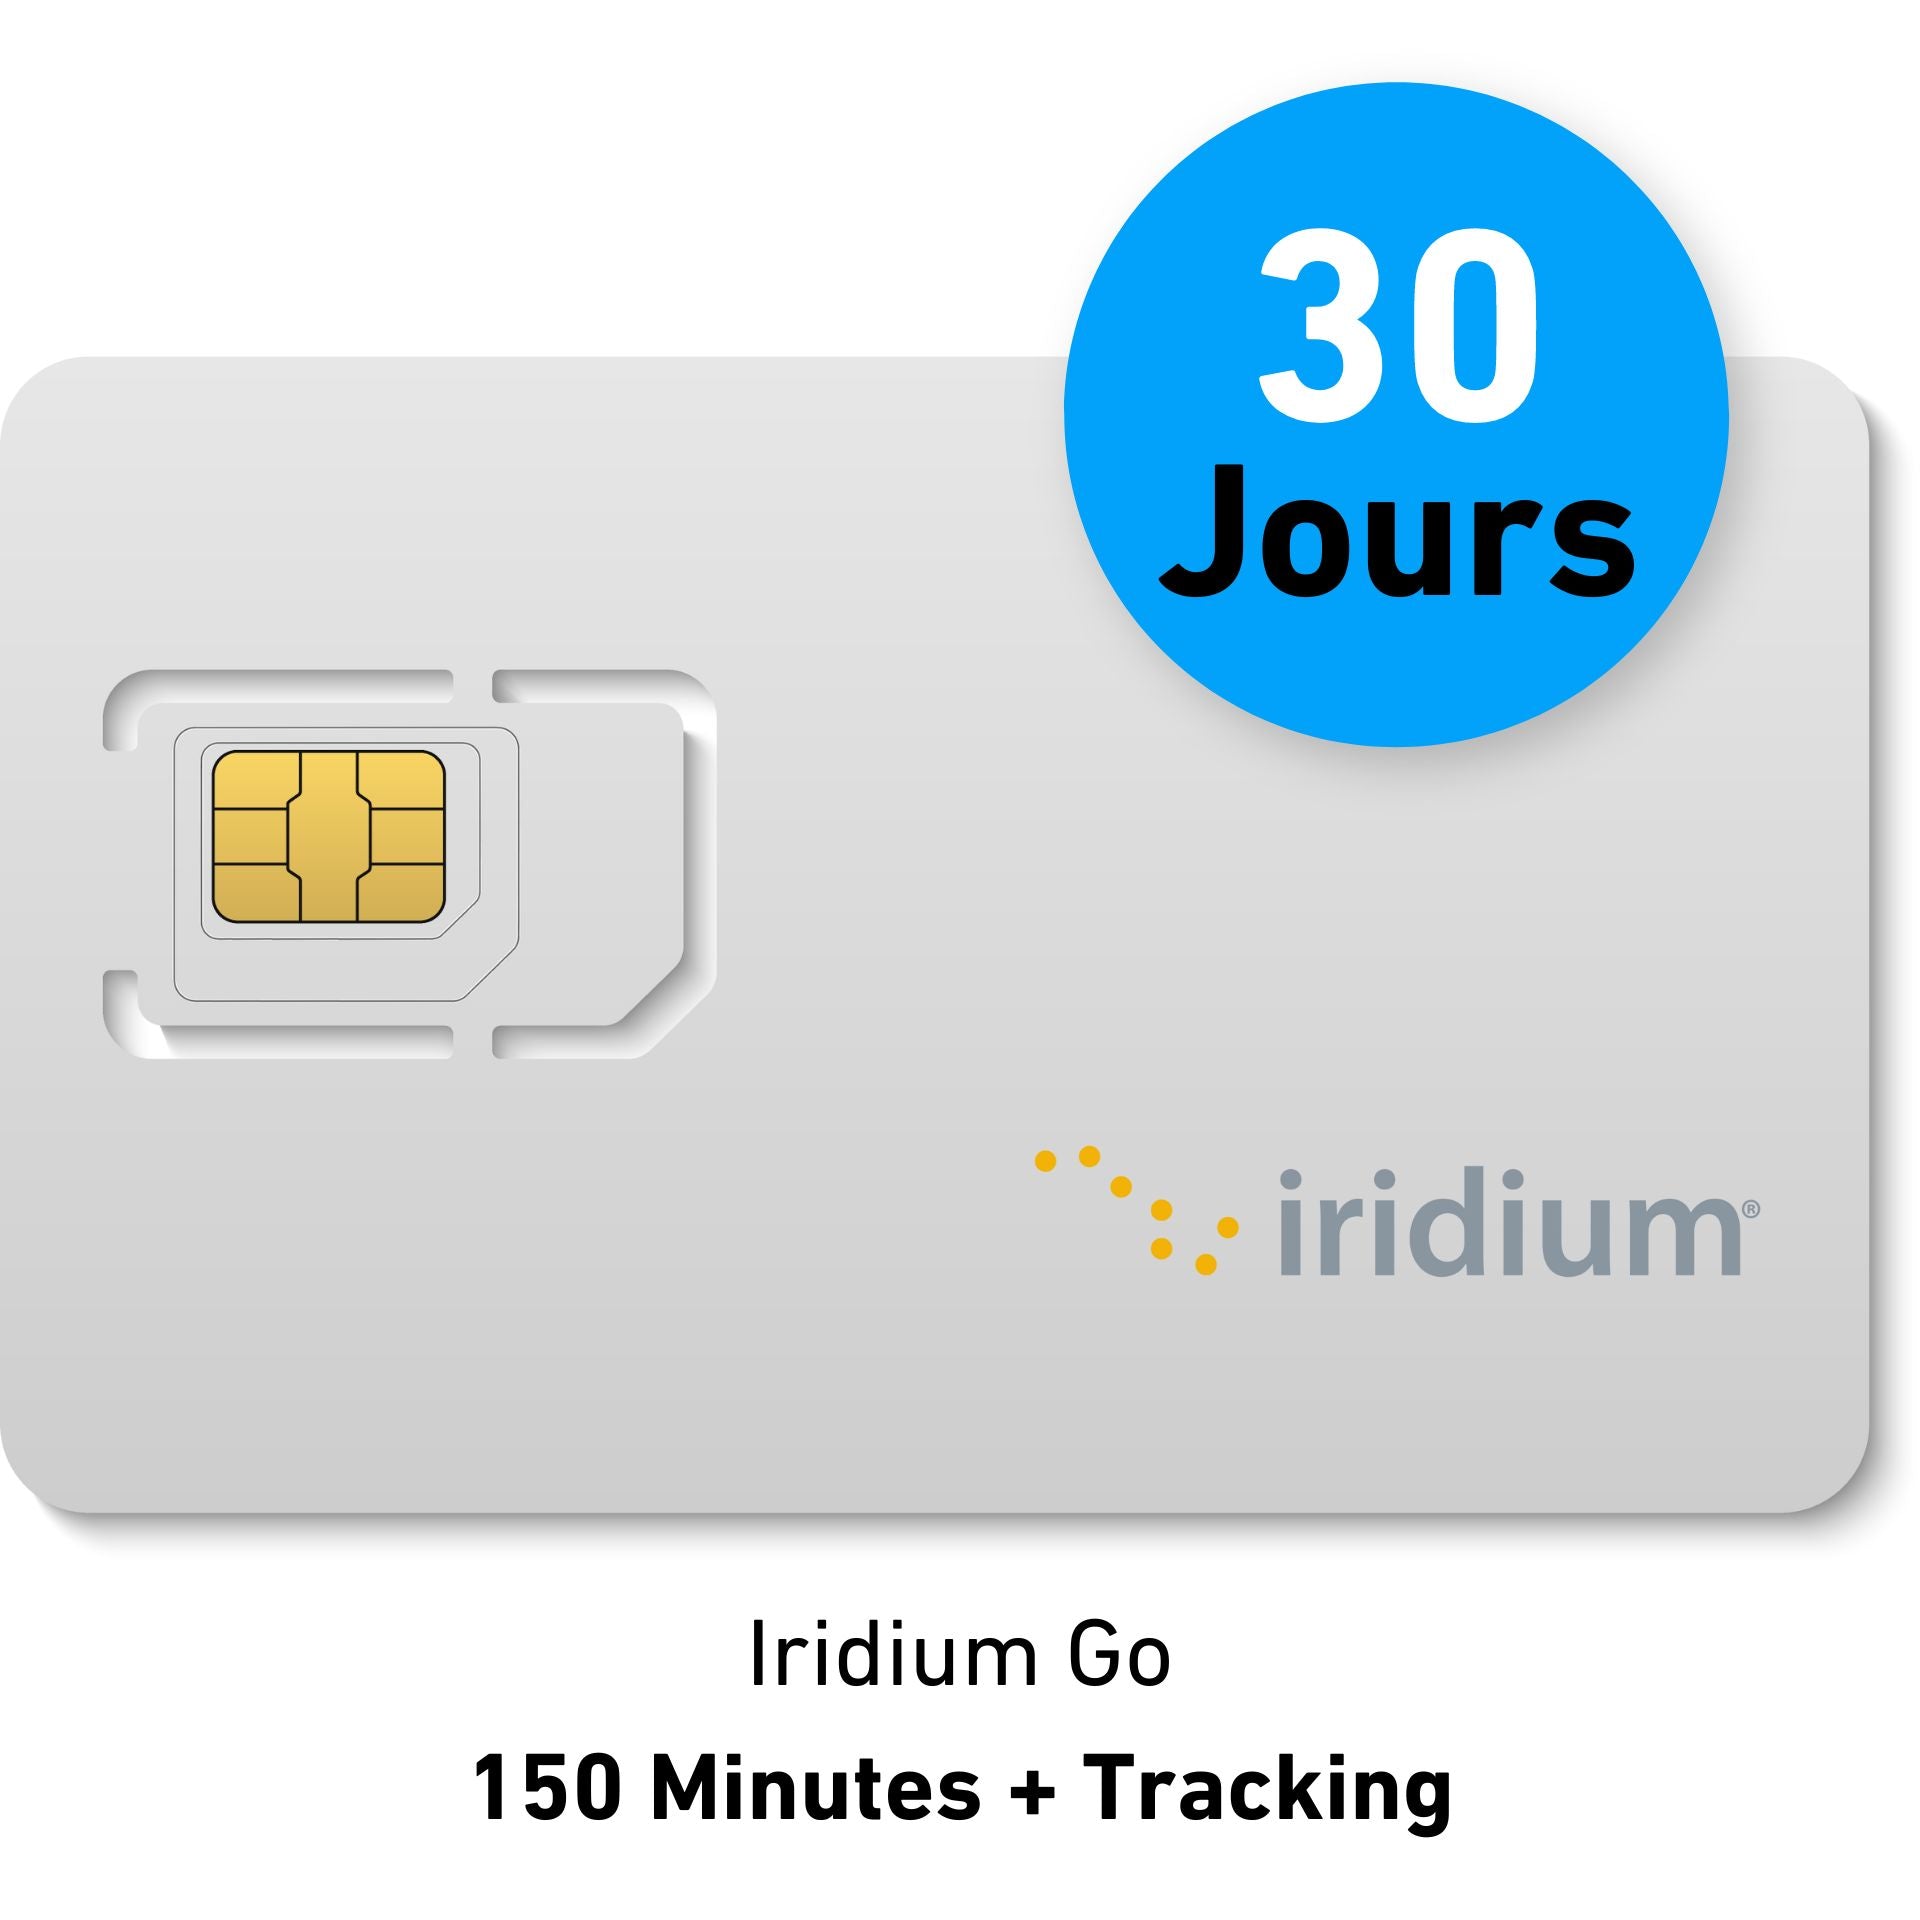 Abono mensual IRIDIUM GO DATA & SMS ilimitados + 150 MIN Voz - Seguimiento